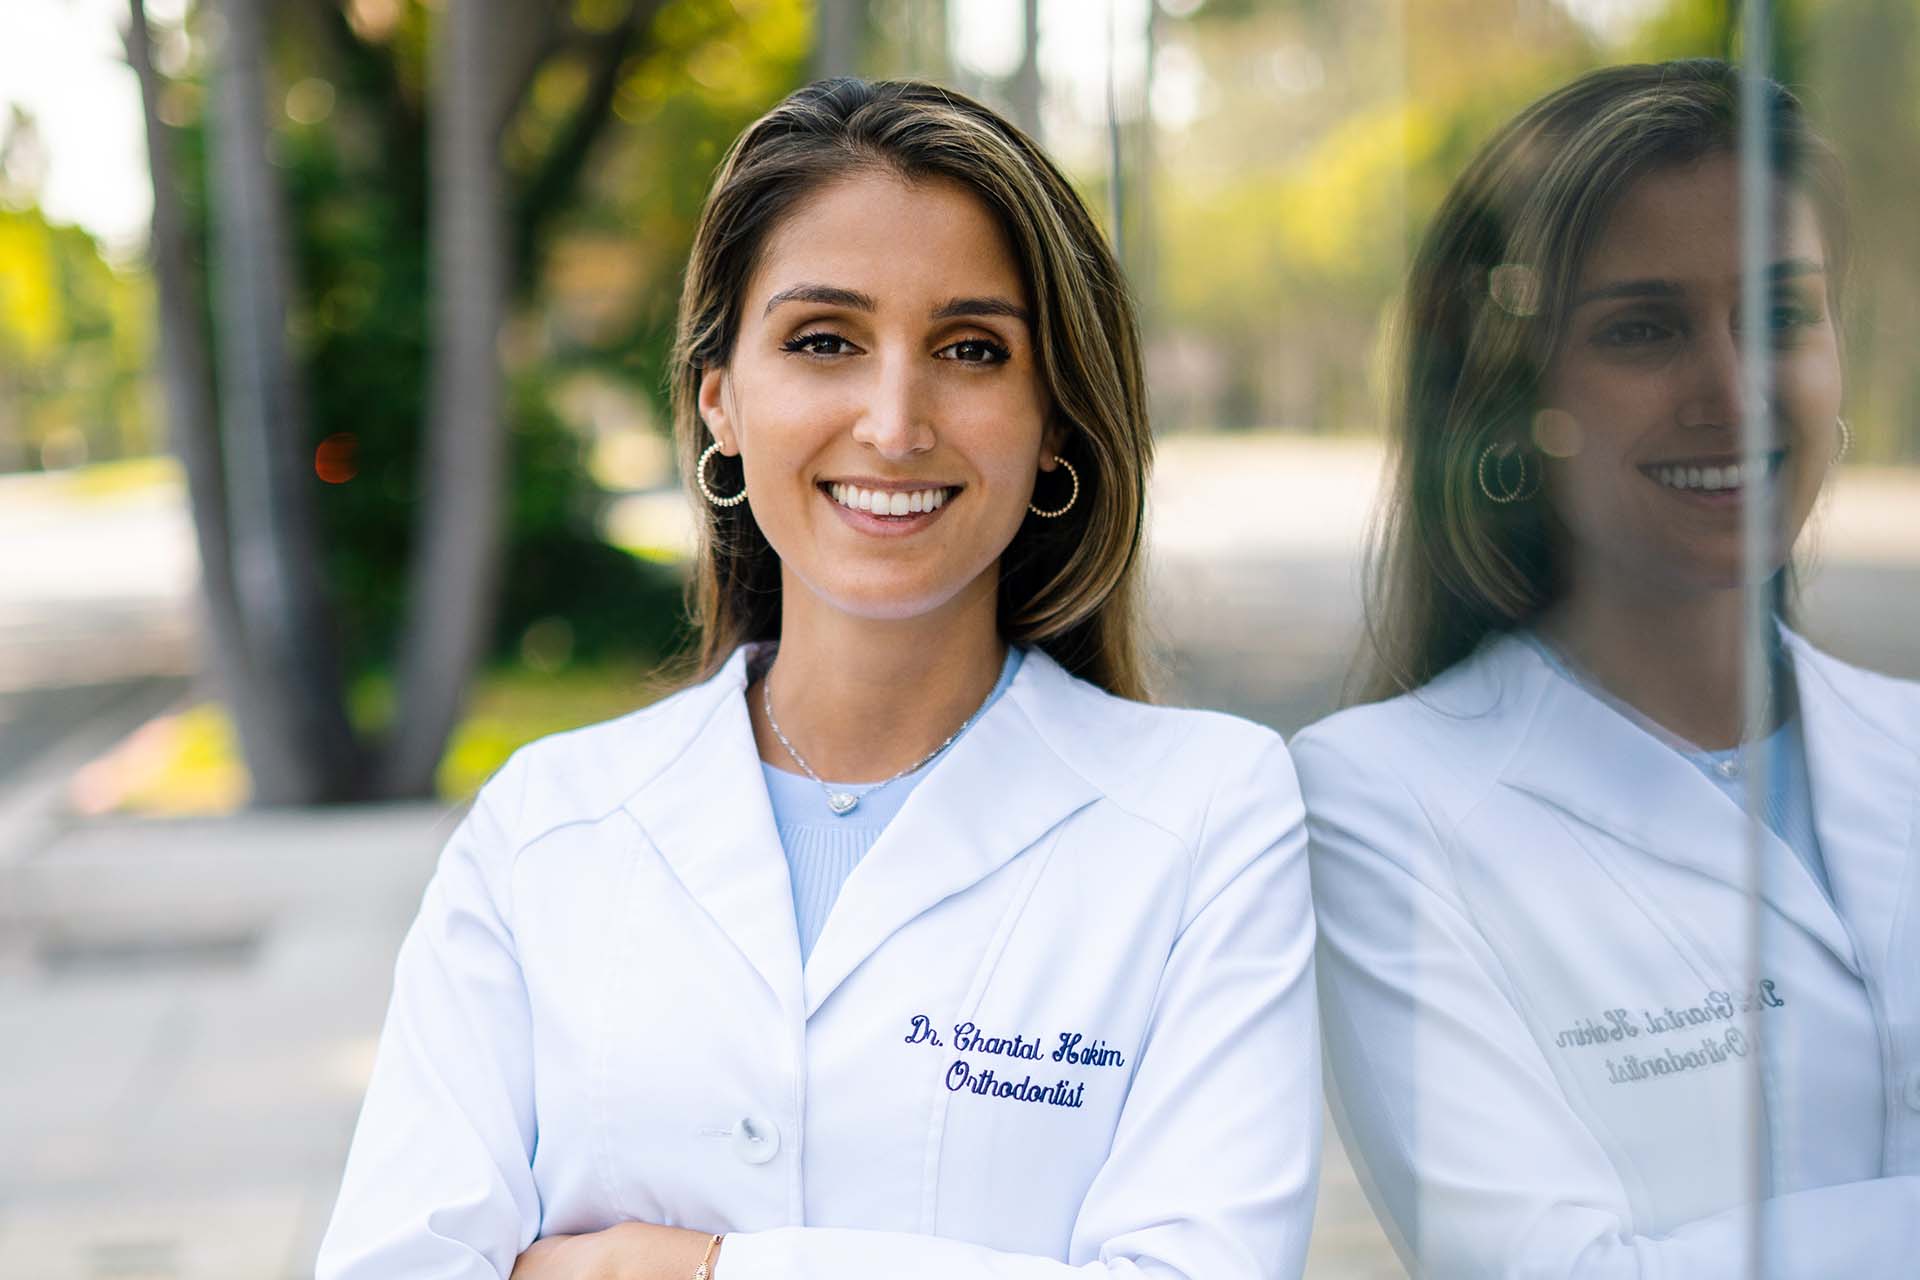 Dr Chantal Hakim of the Orthospaceship - Hakim Orthodontics serving Sherman Oaks, Los Angeles